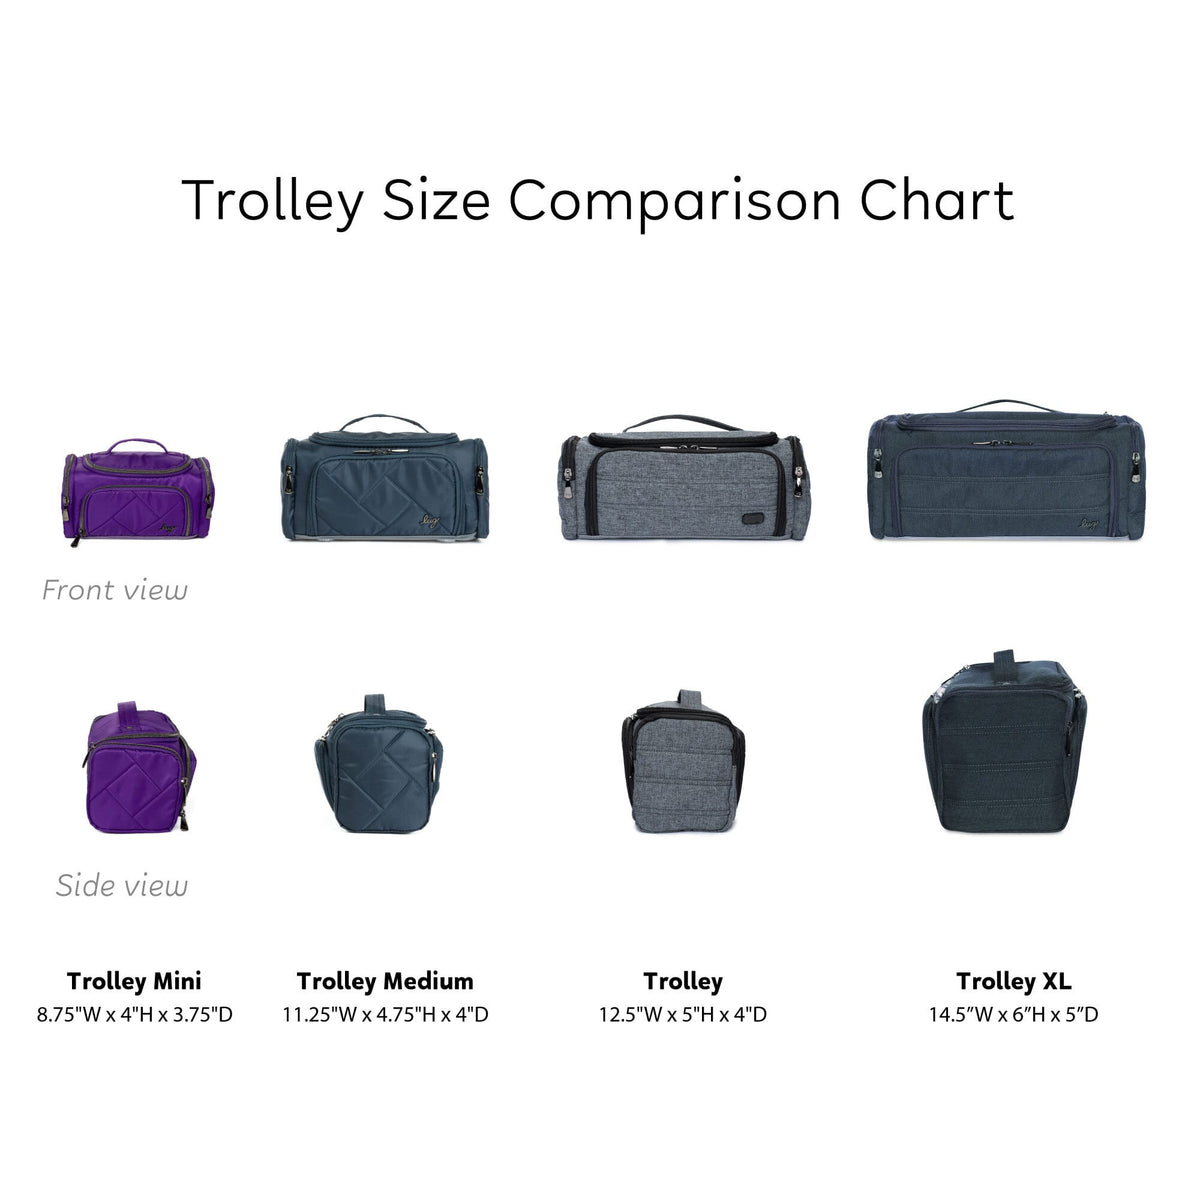 Trolley Cosmetic Case